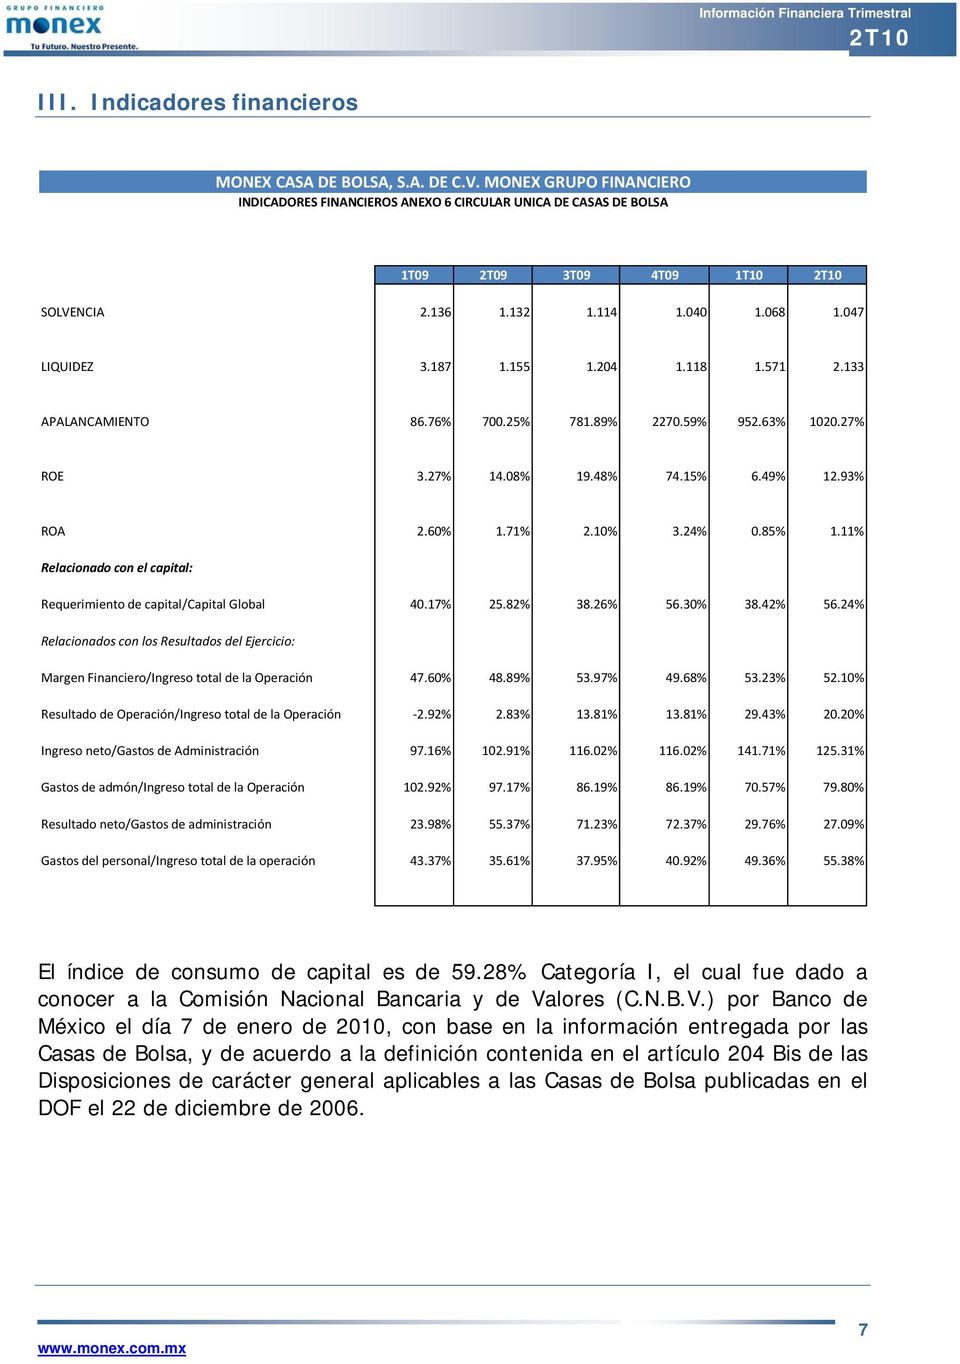 27% Pasivo total Liquid de la soc/capital Cont ROE 3.27% 14.08% 19.48% 74.15% 6.49% 12.93% Resultado neto/capital Contable ROA 2.60% 1.71% 2.10% 3.24% 0.85% 1.